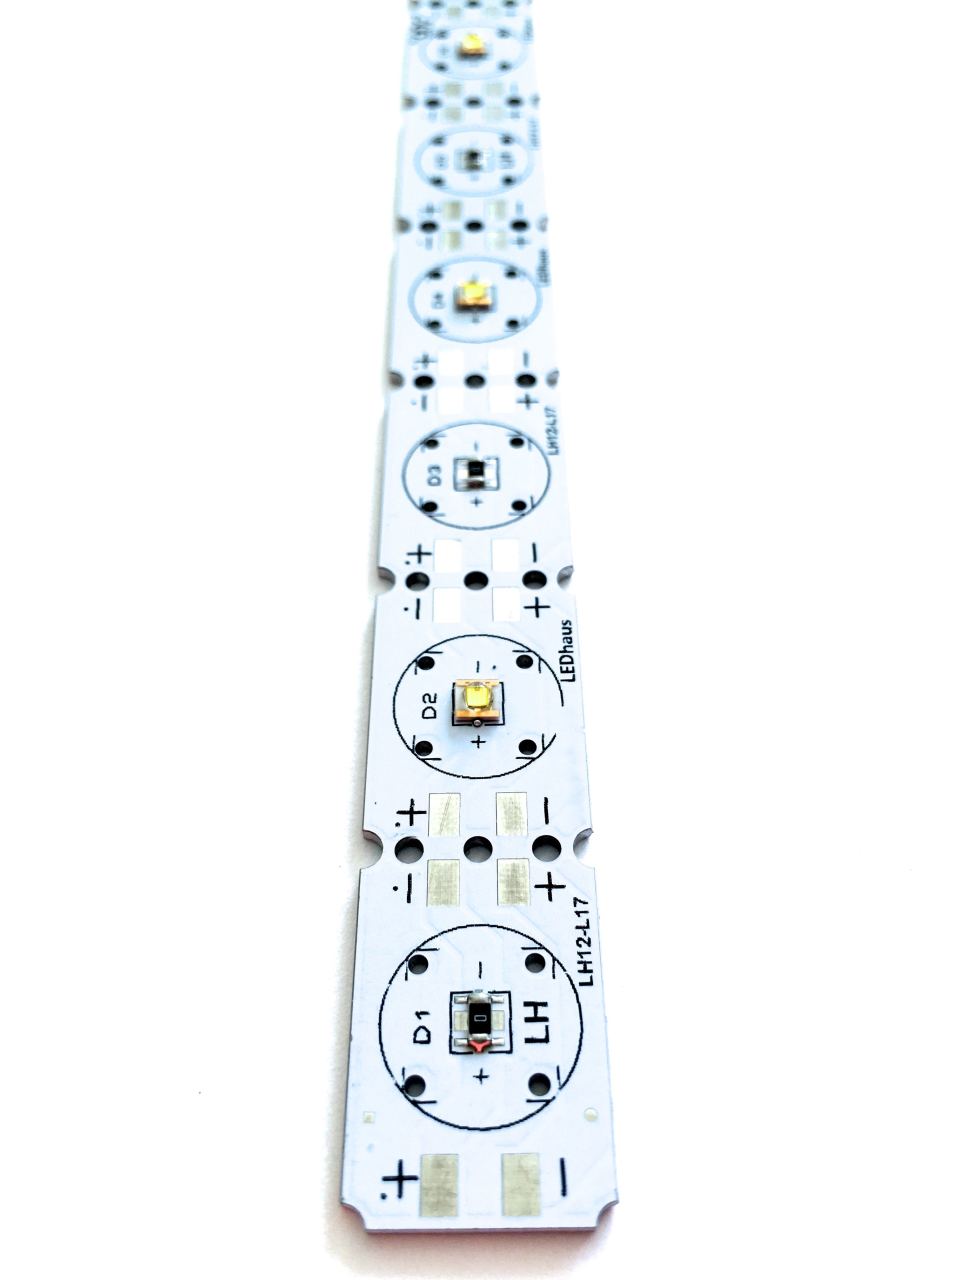 LH12-L17 6W - 10W Opsiyonlu SemiLEDs LED Modül - 30 cm'de 6 LED'li Sabit Akım 17-21V 350mA - 500mA